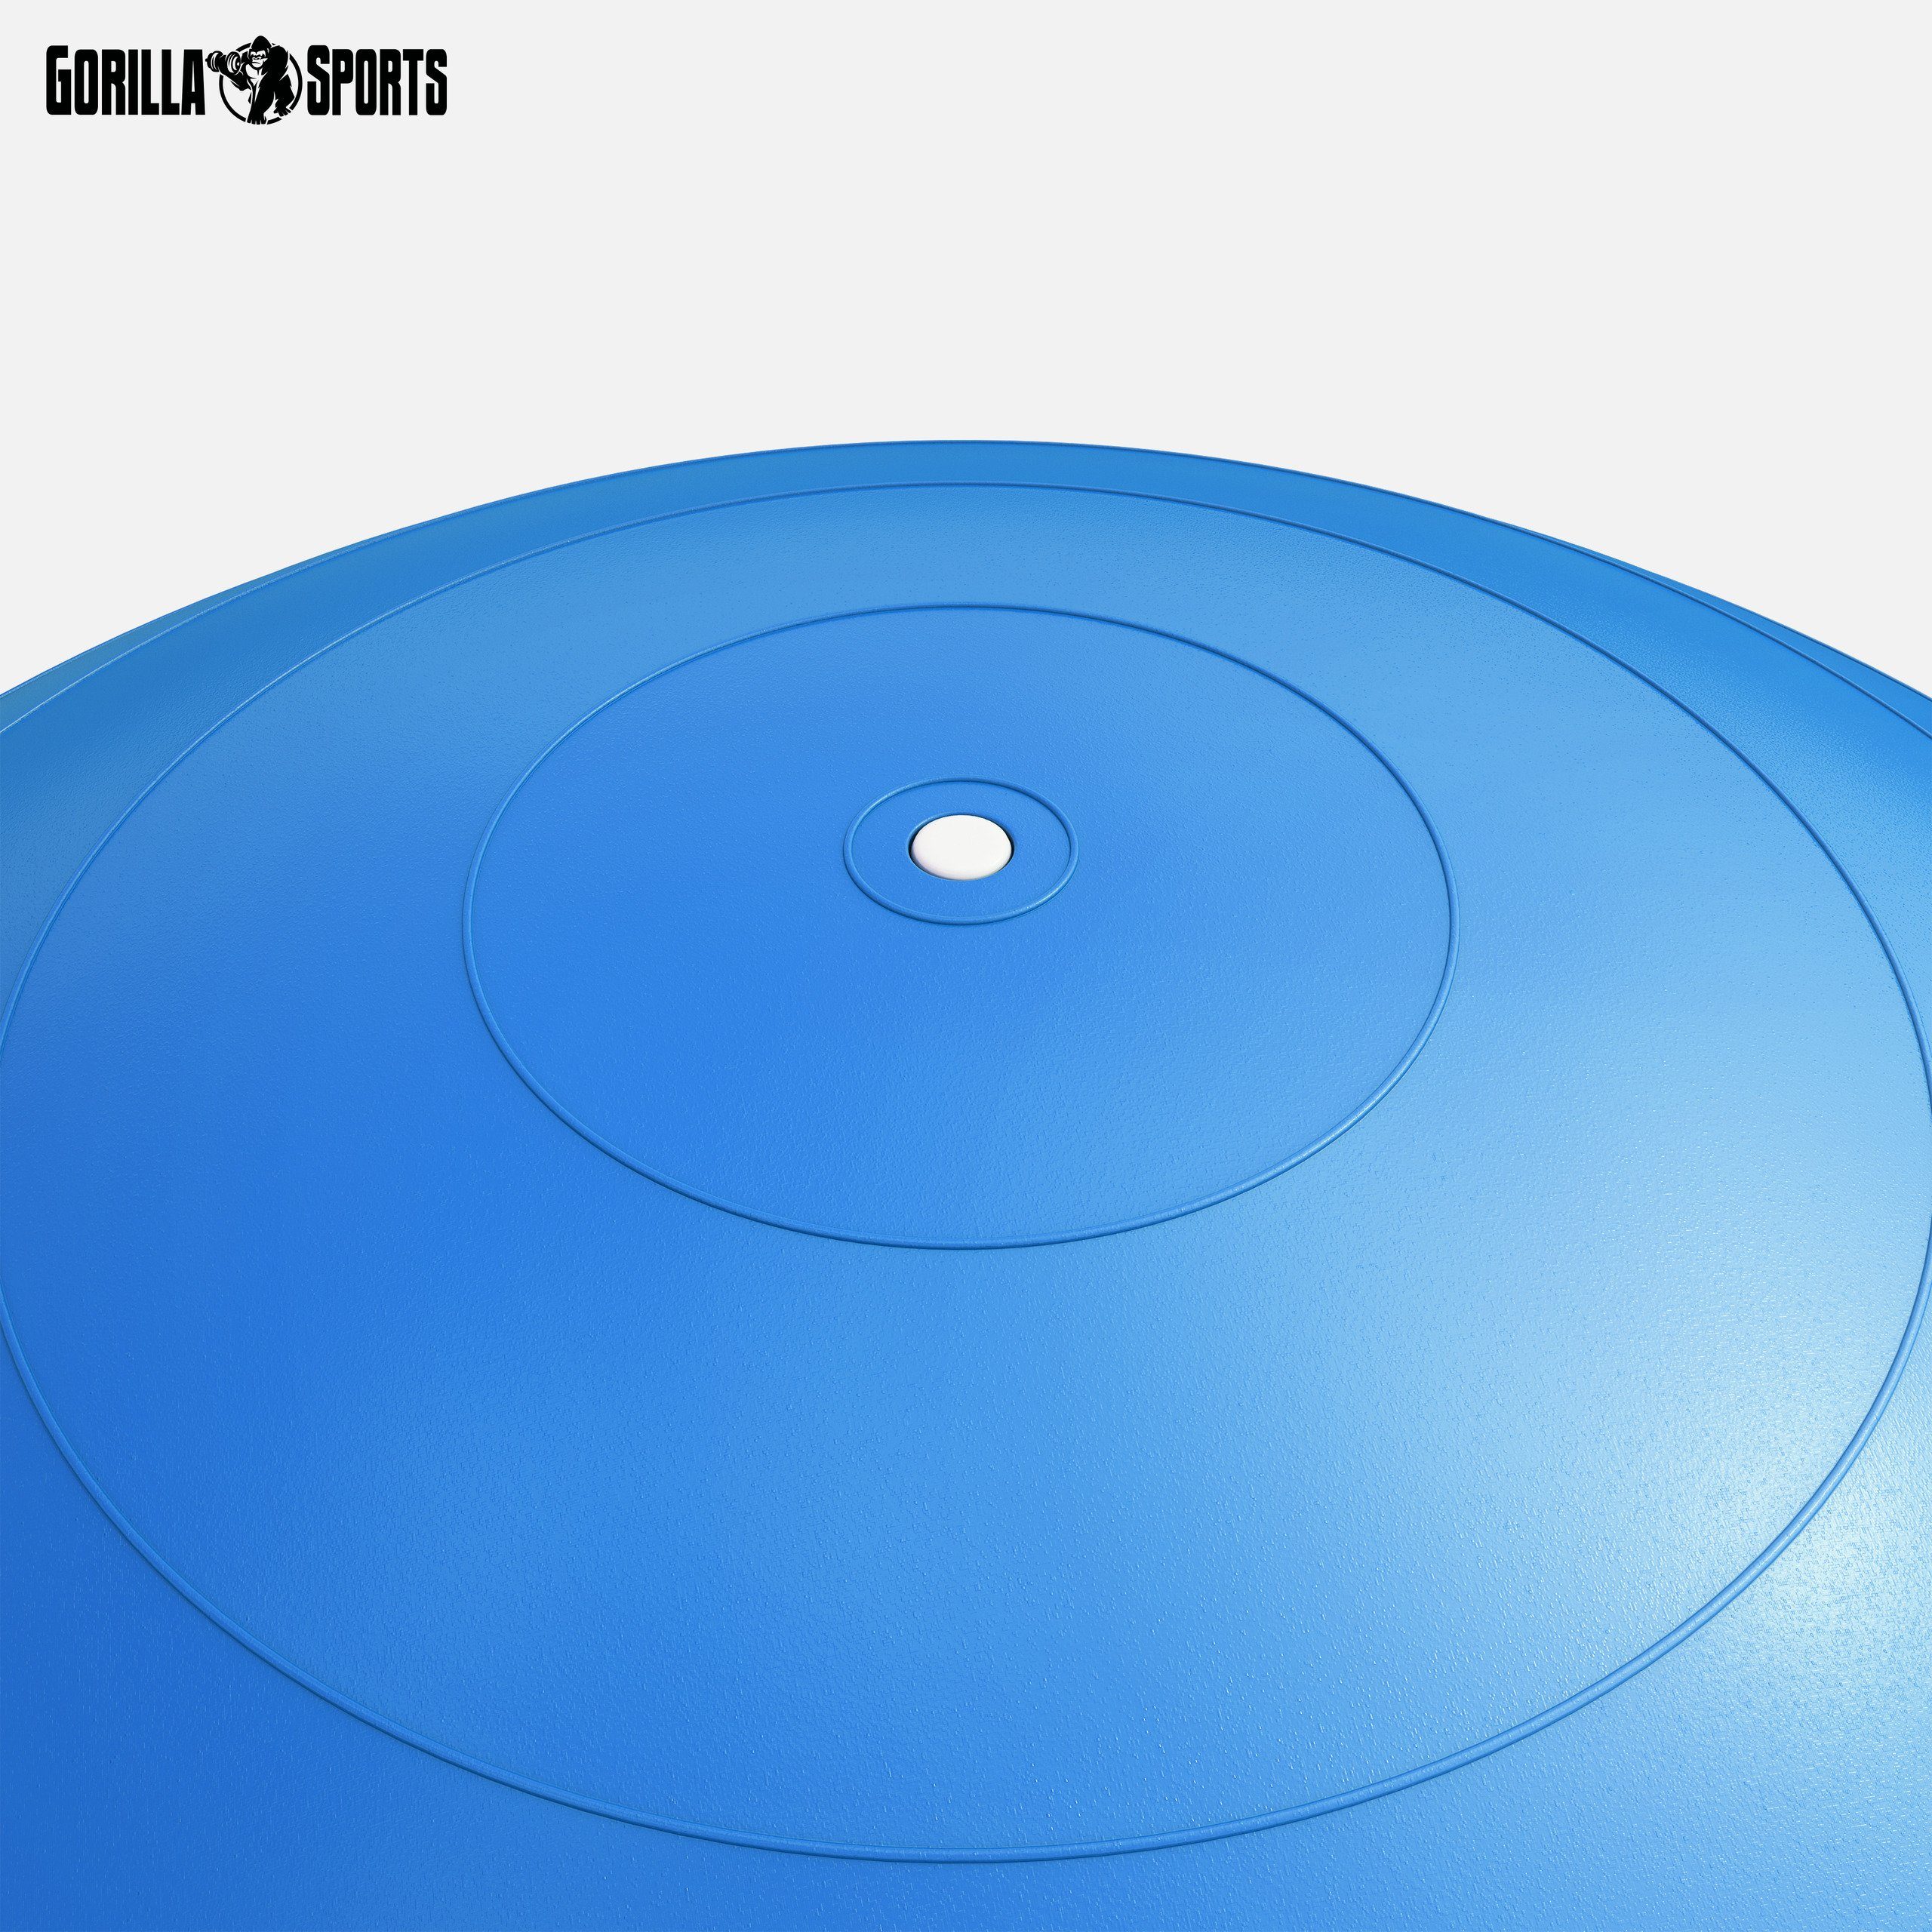 Belastbar, Blau Farbwahl SPORTS bis 500kg Anti-Burst, 55cm/65cm/75cm, GORILLA Gymnastikball -Fitnessball